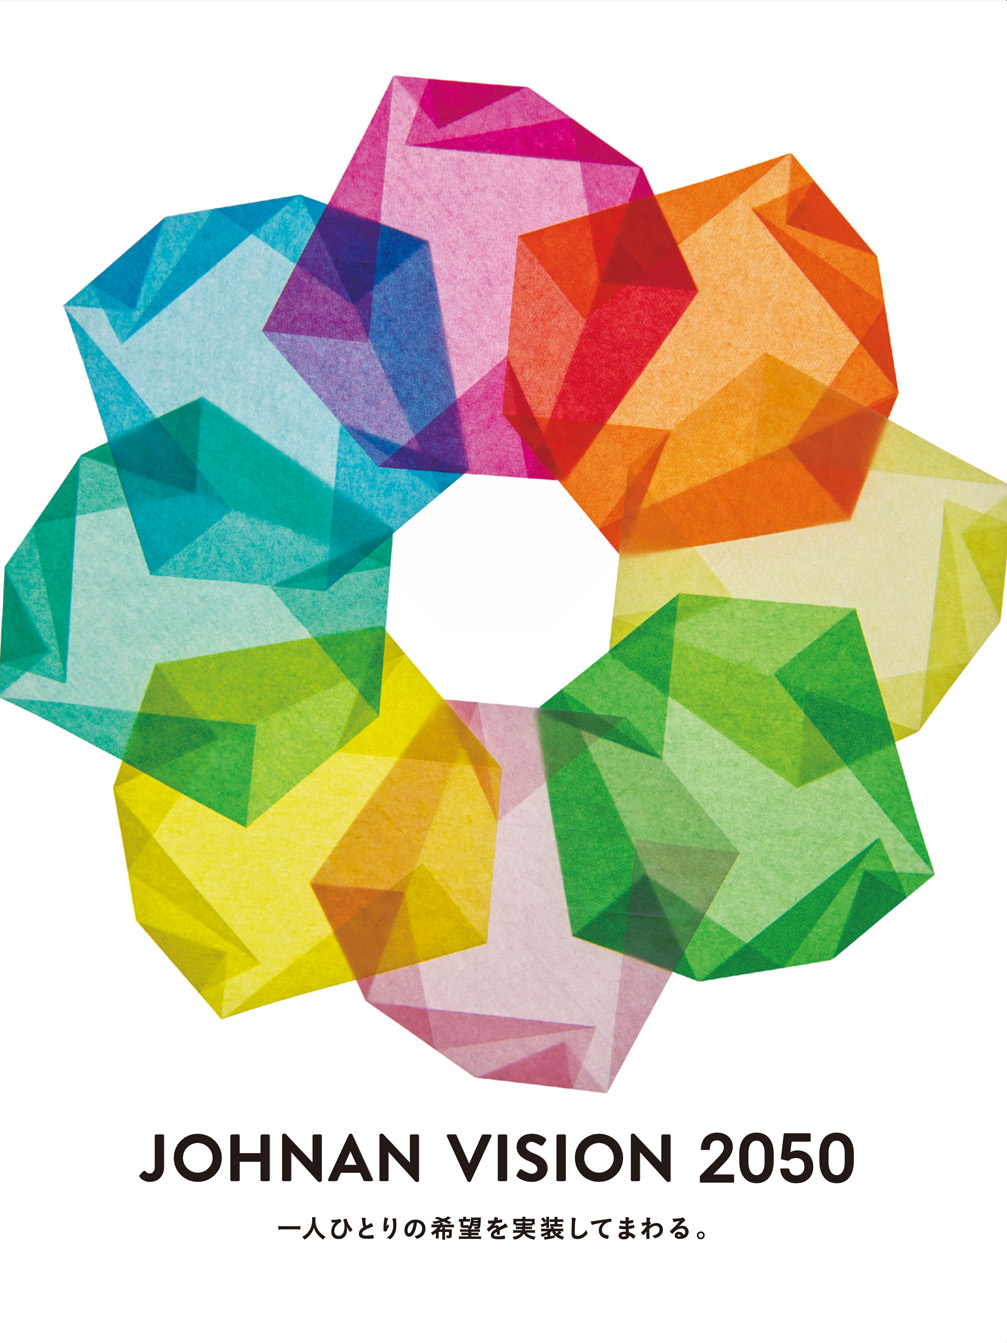 PDFイメージ画像:JOHNAN VISION 2050 日本語Ver.